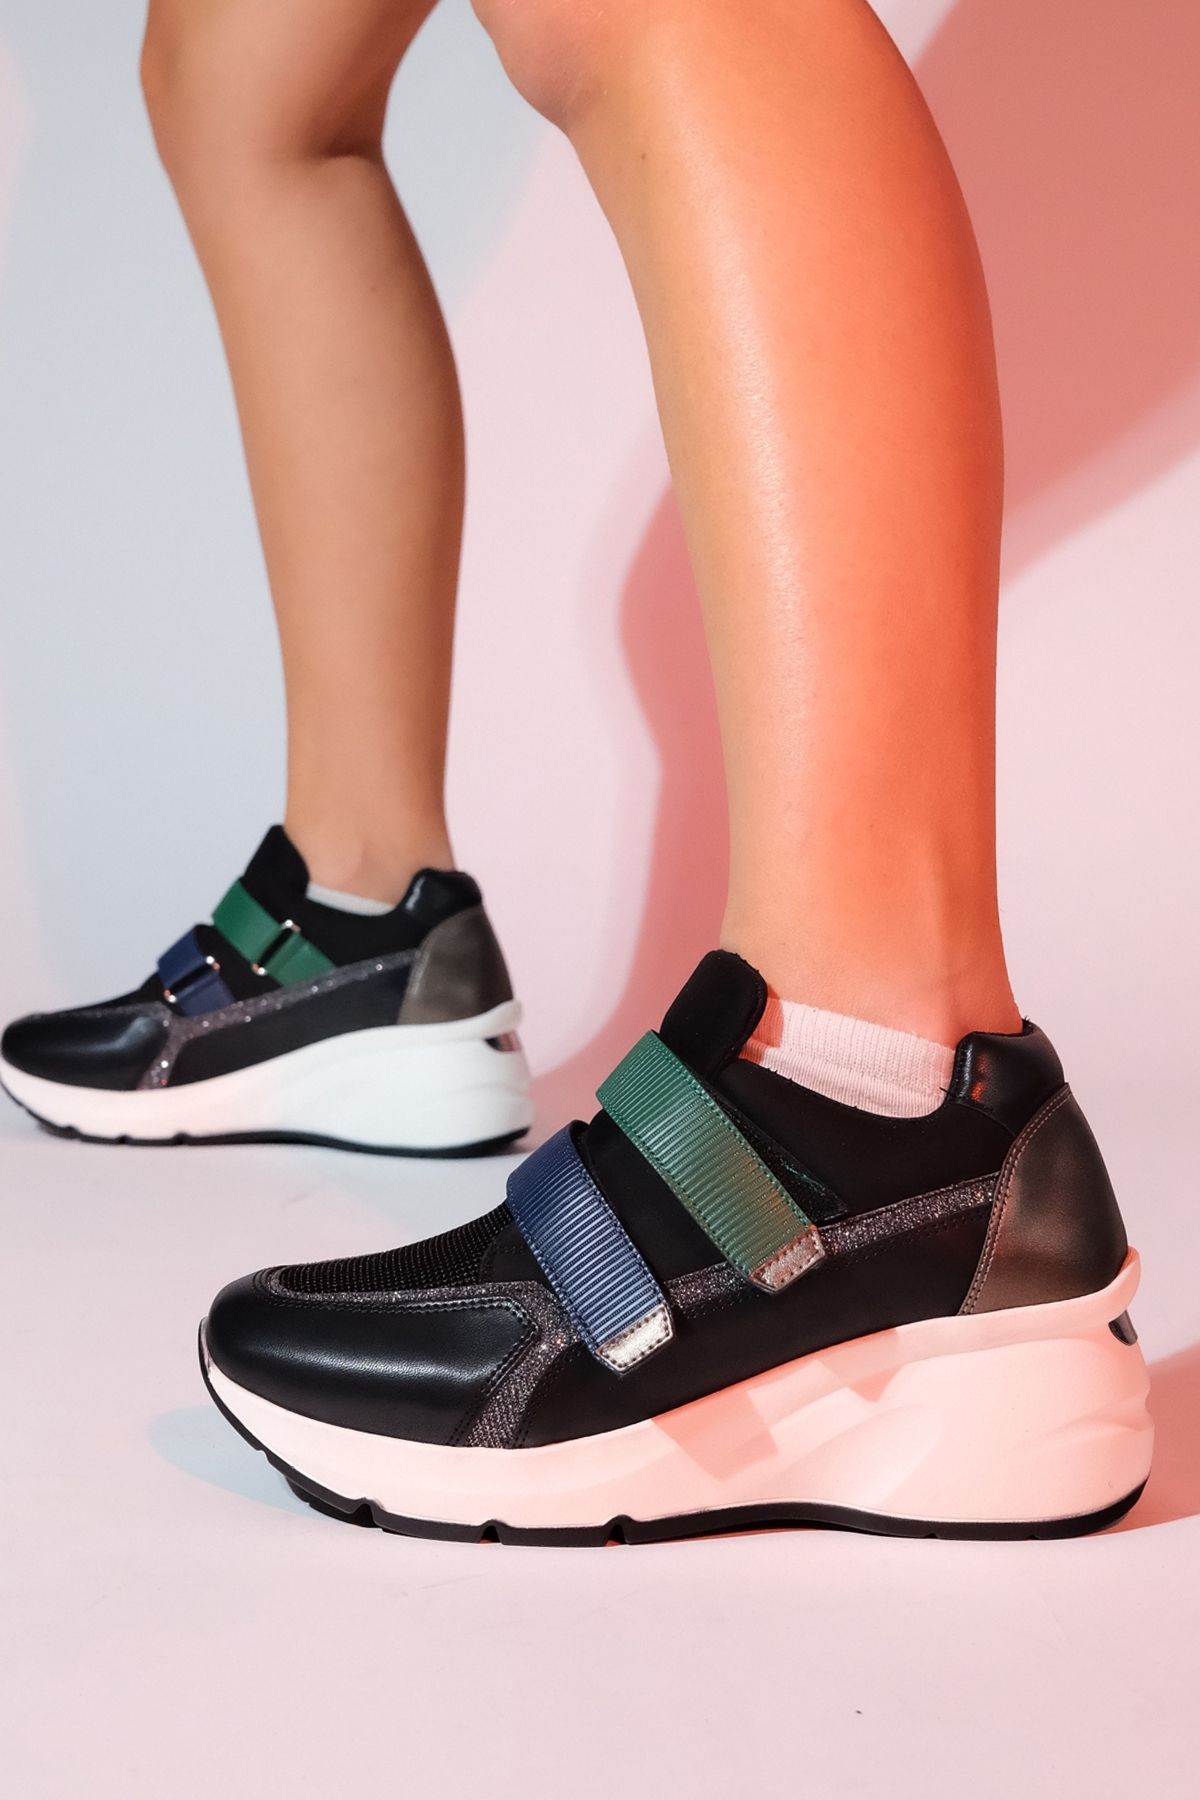 luvishoes BERGE Siyah Multi Kadın Cırtlı Dolgu Taban Spor Sneakers